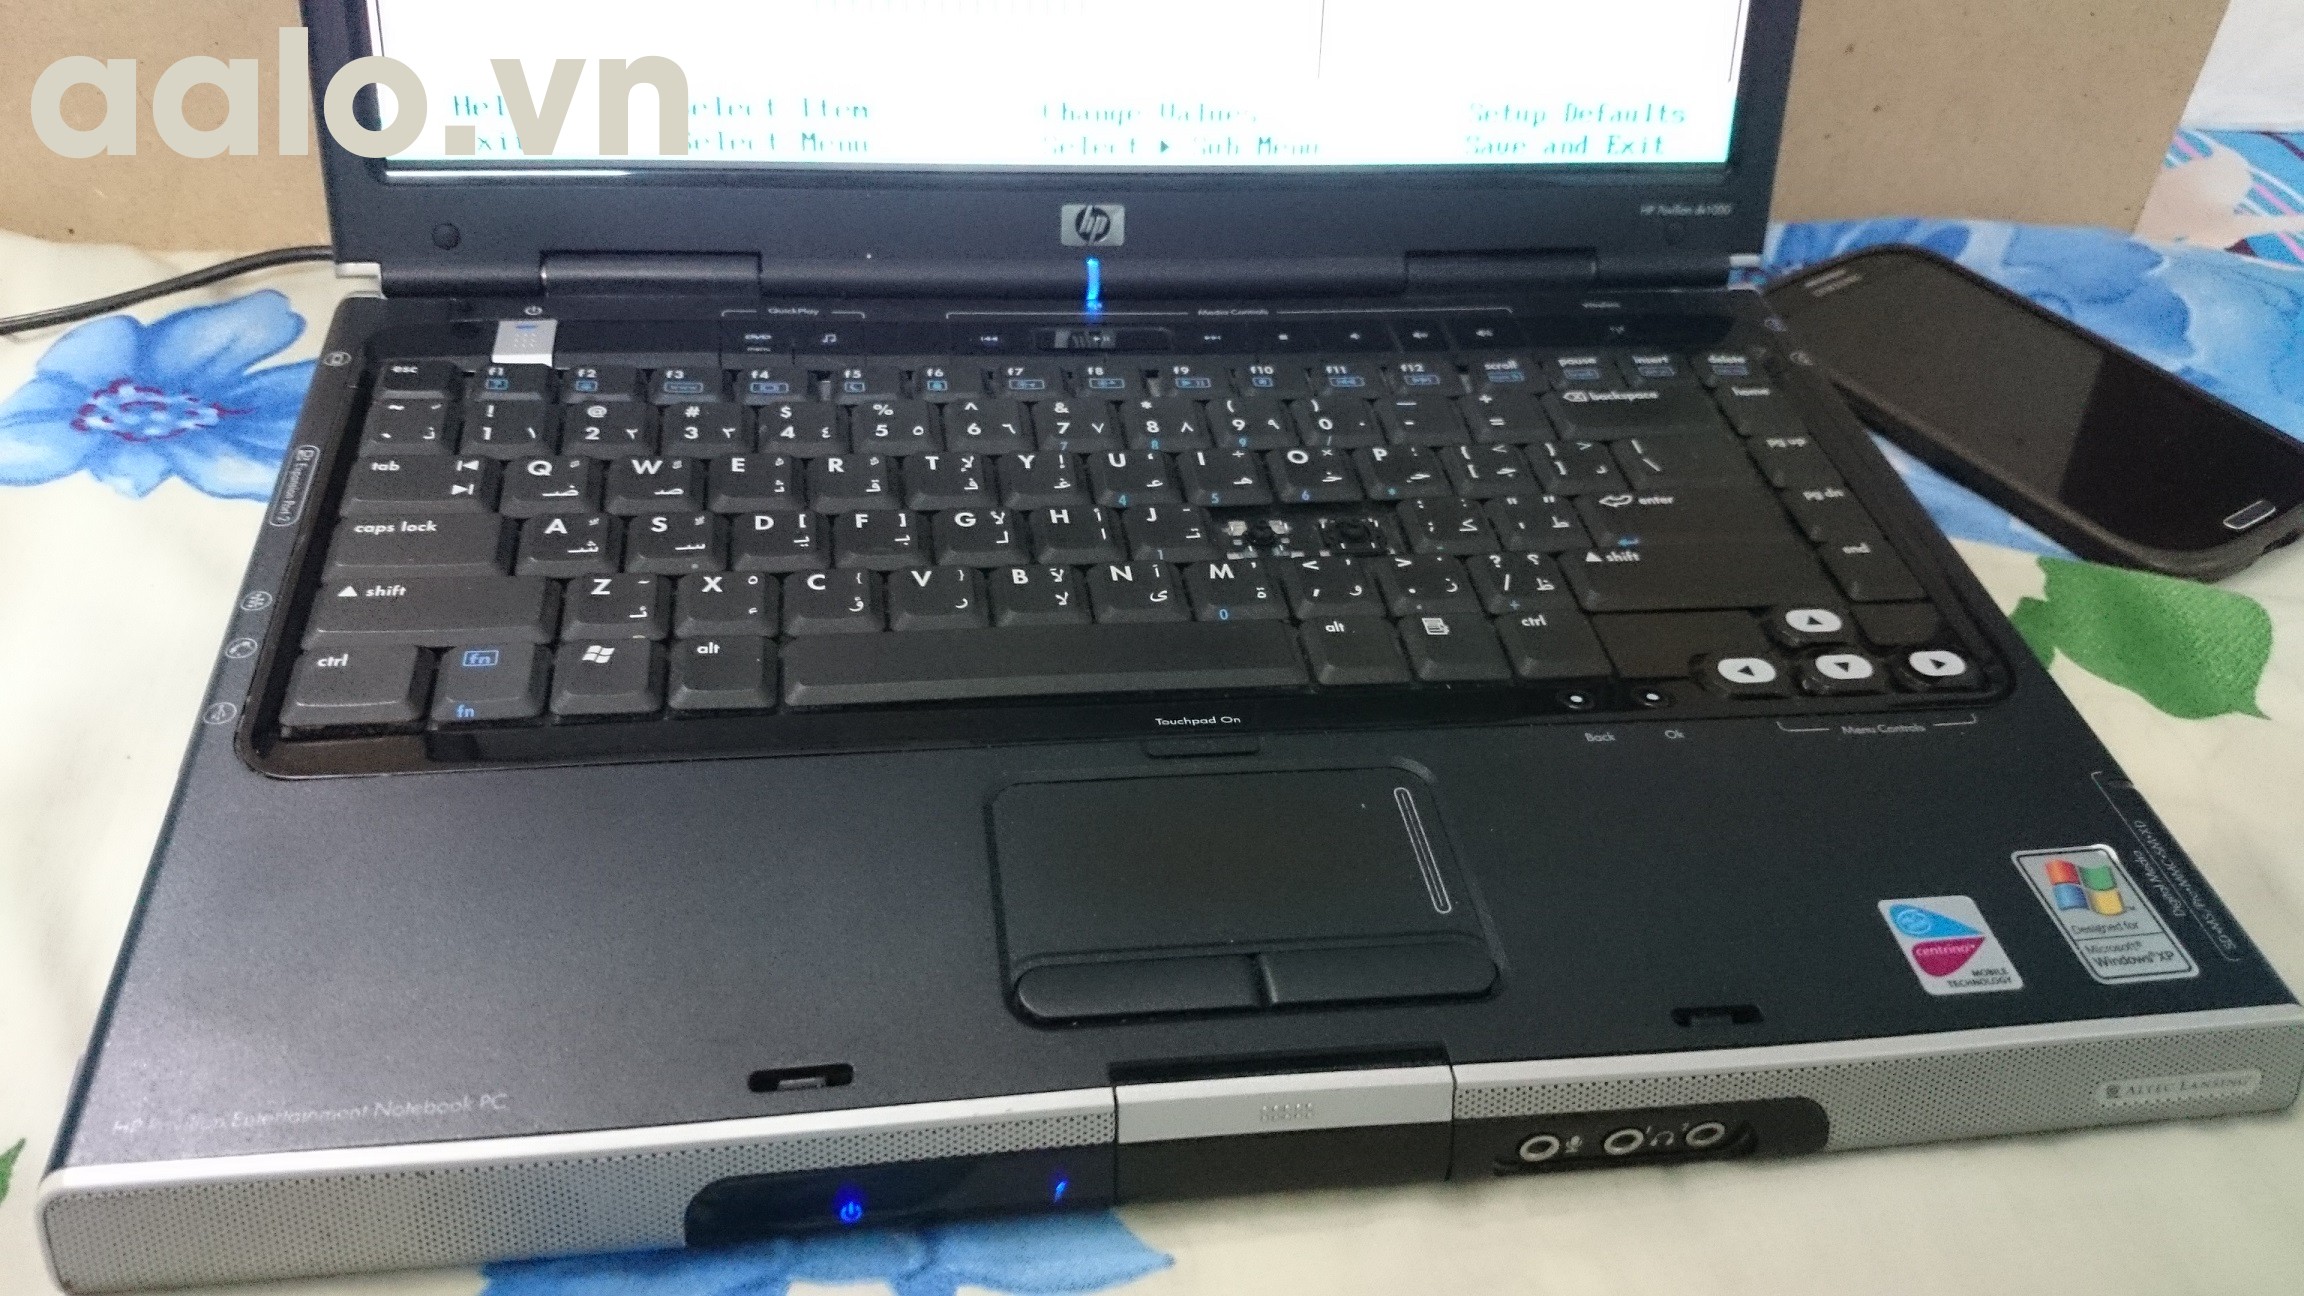 Bàn phím HP DV1000 DV1100 DV1200 DV1300 DV1500 - Keyboard HP